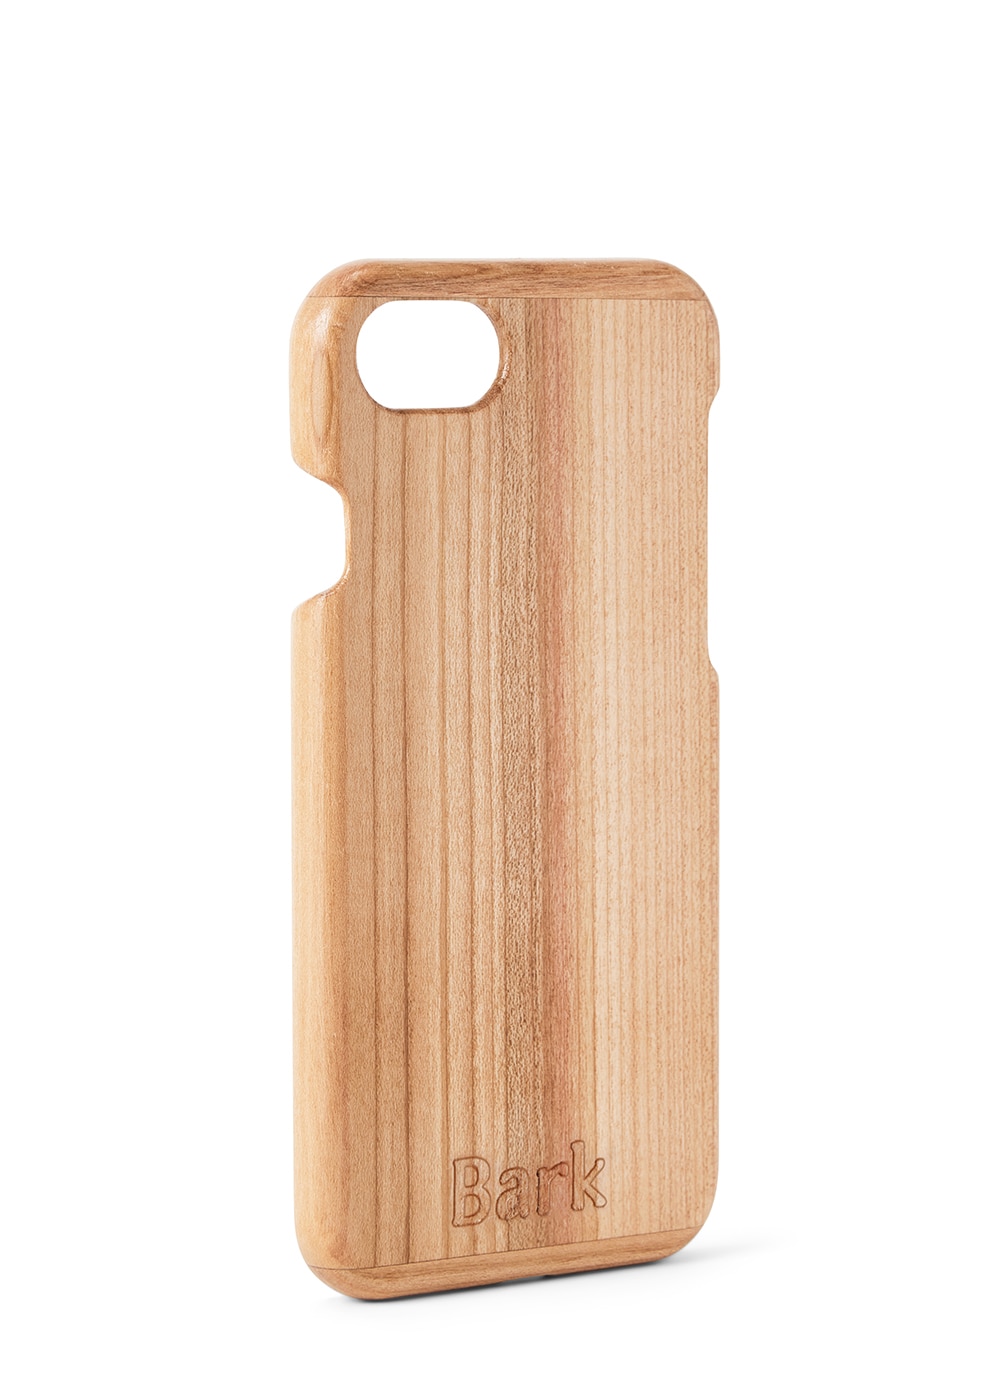 iPhone SE (2022) case made of Swedish hardwood - Körsbär